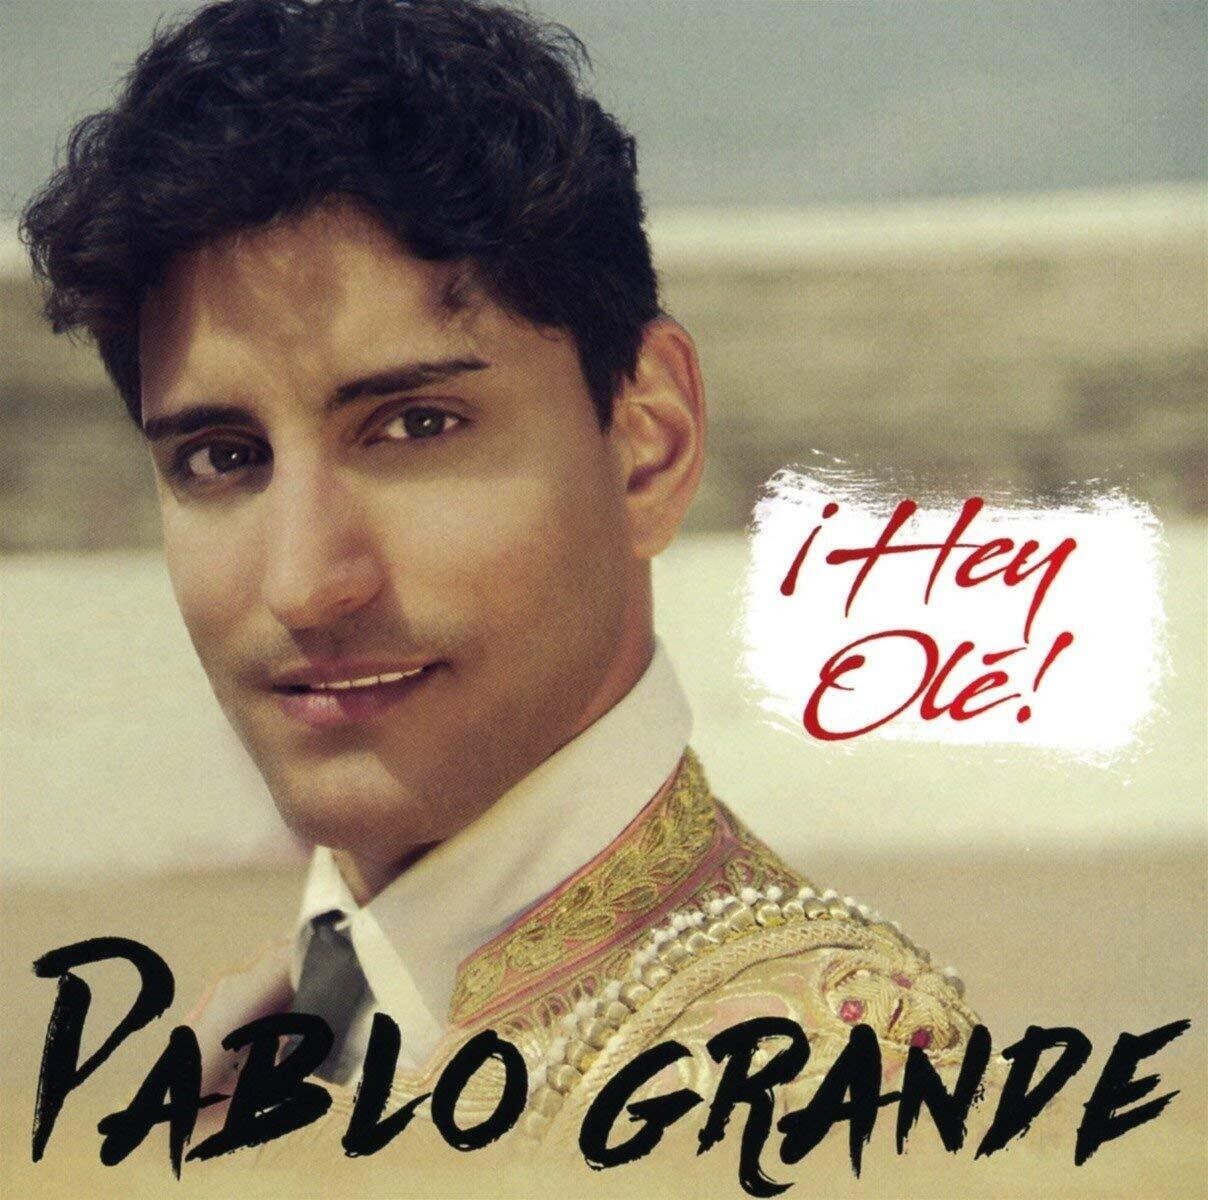 Pablo Grande - Hey Olé (2018) CD